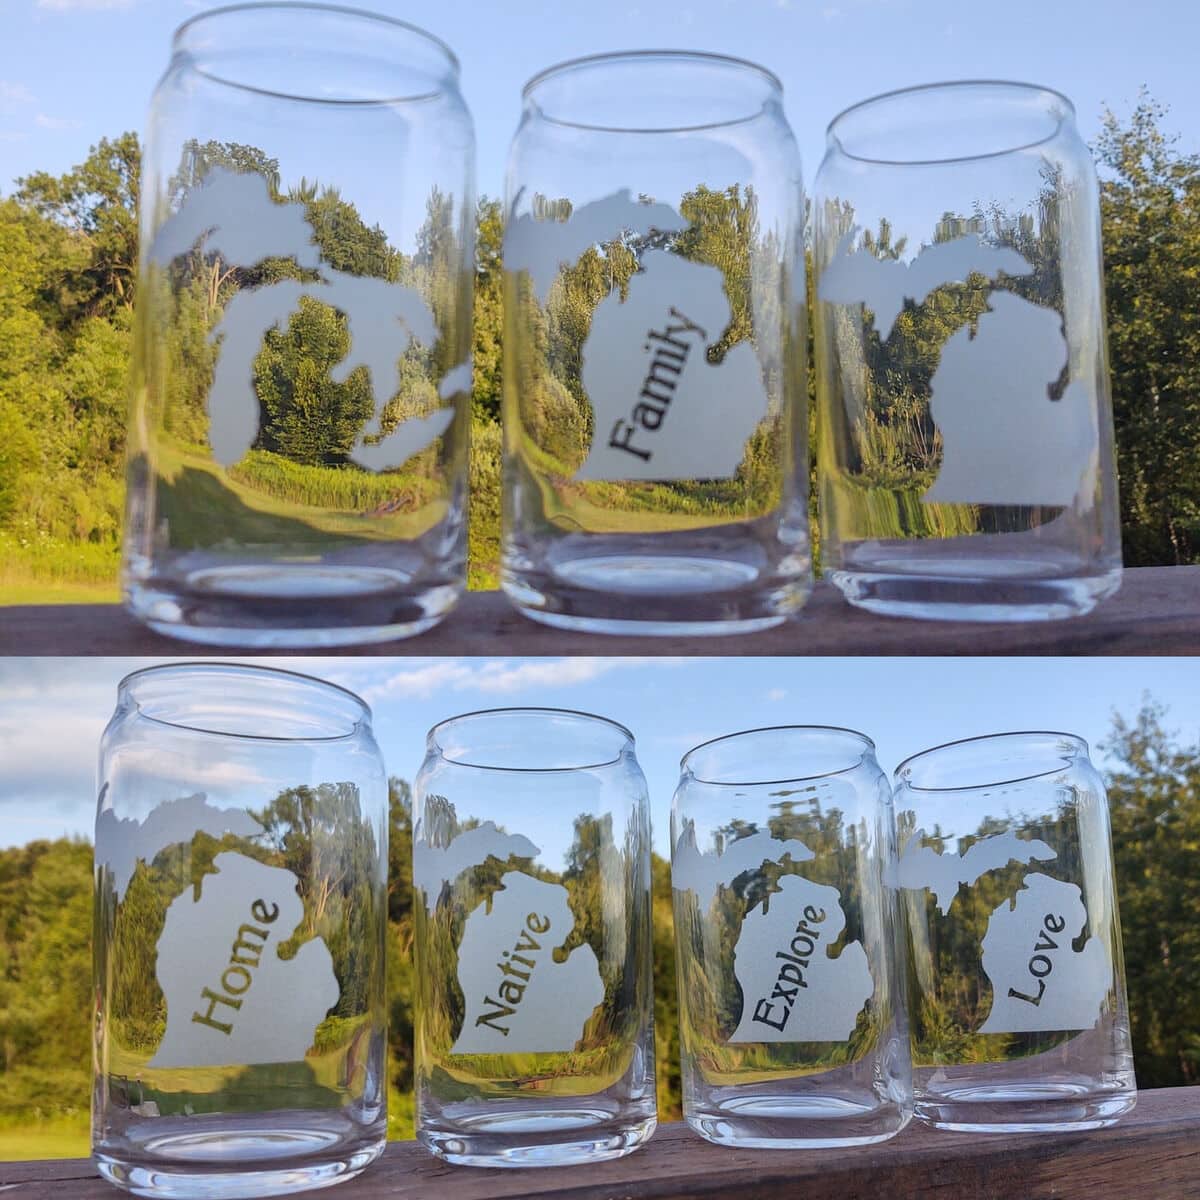 https://madeinmichigan.com/wp-content/uploads/2021/08/Michigan-Theme-Beer-Can-Glasses.jpg